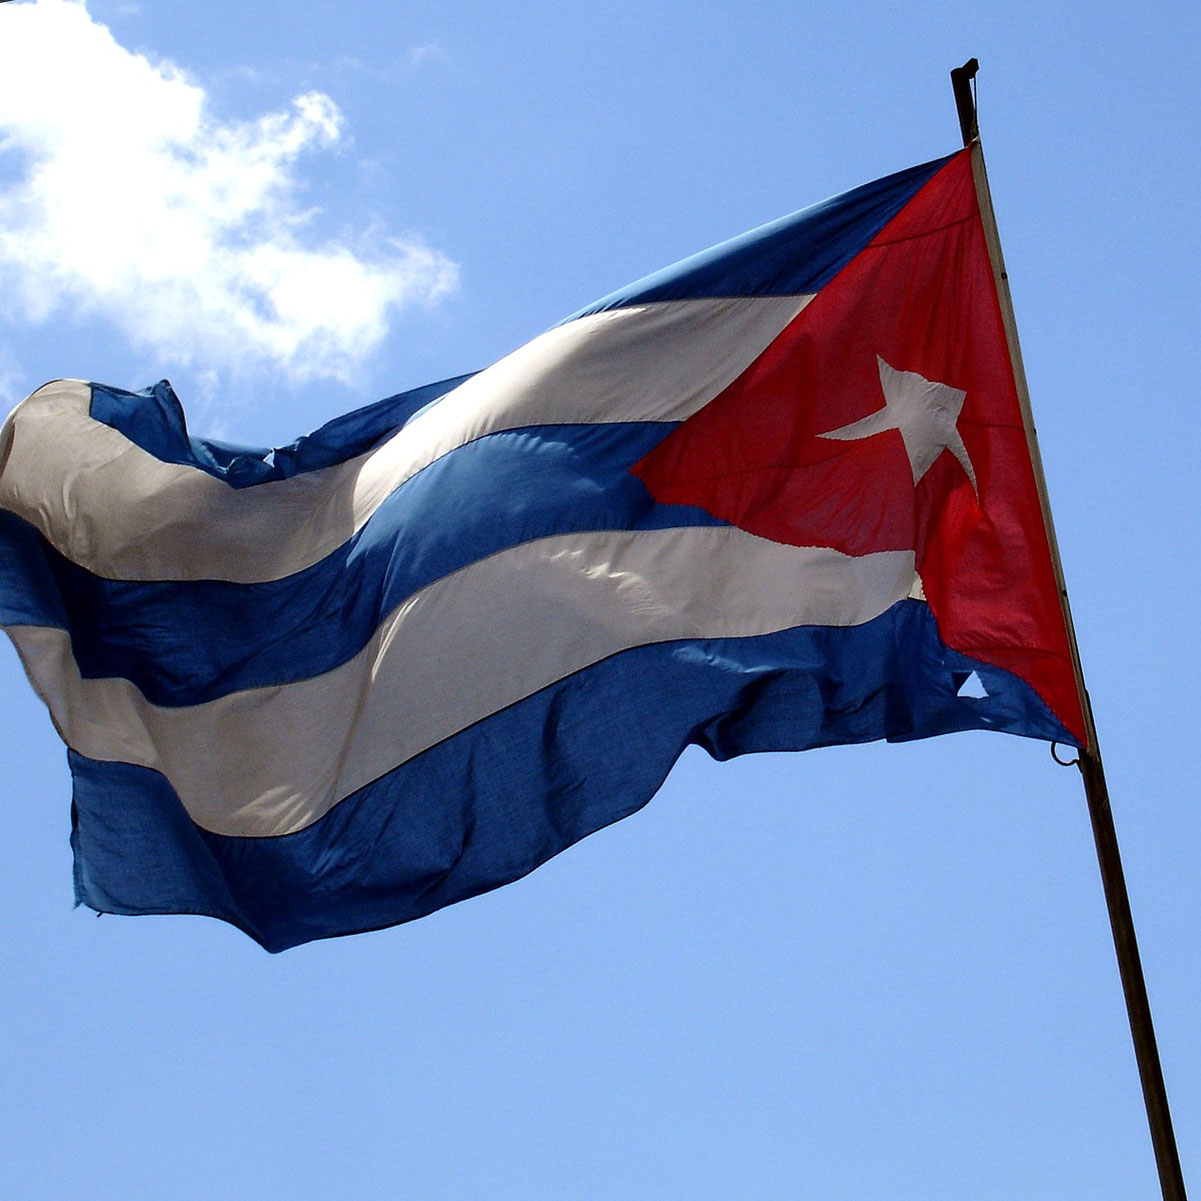 Viva Cuba Socialista (2013)